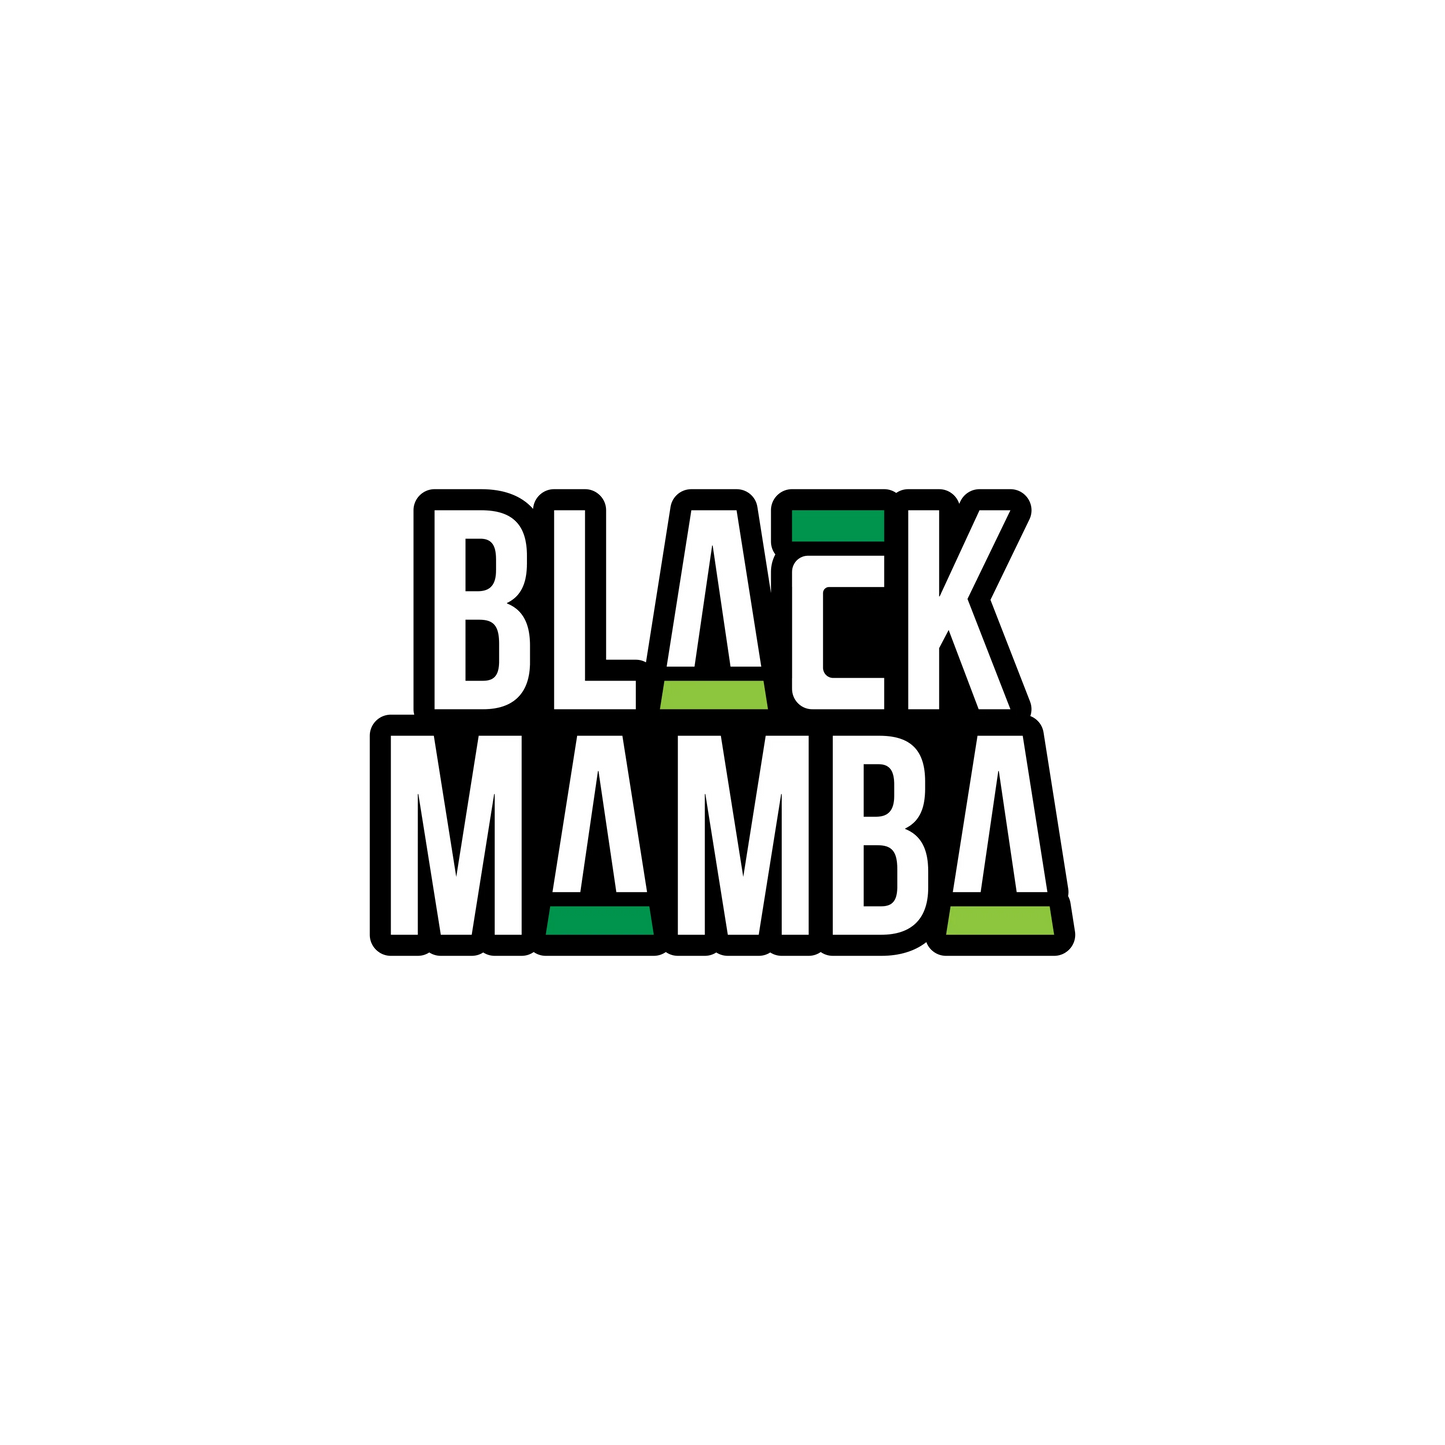 Black Mamba E-Liquid (60mL)